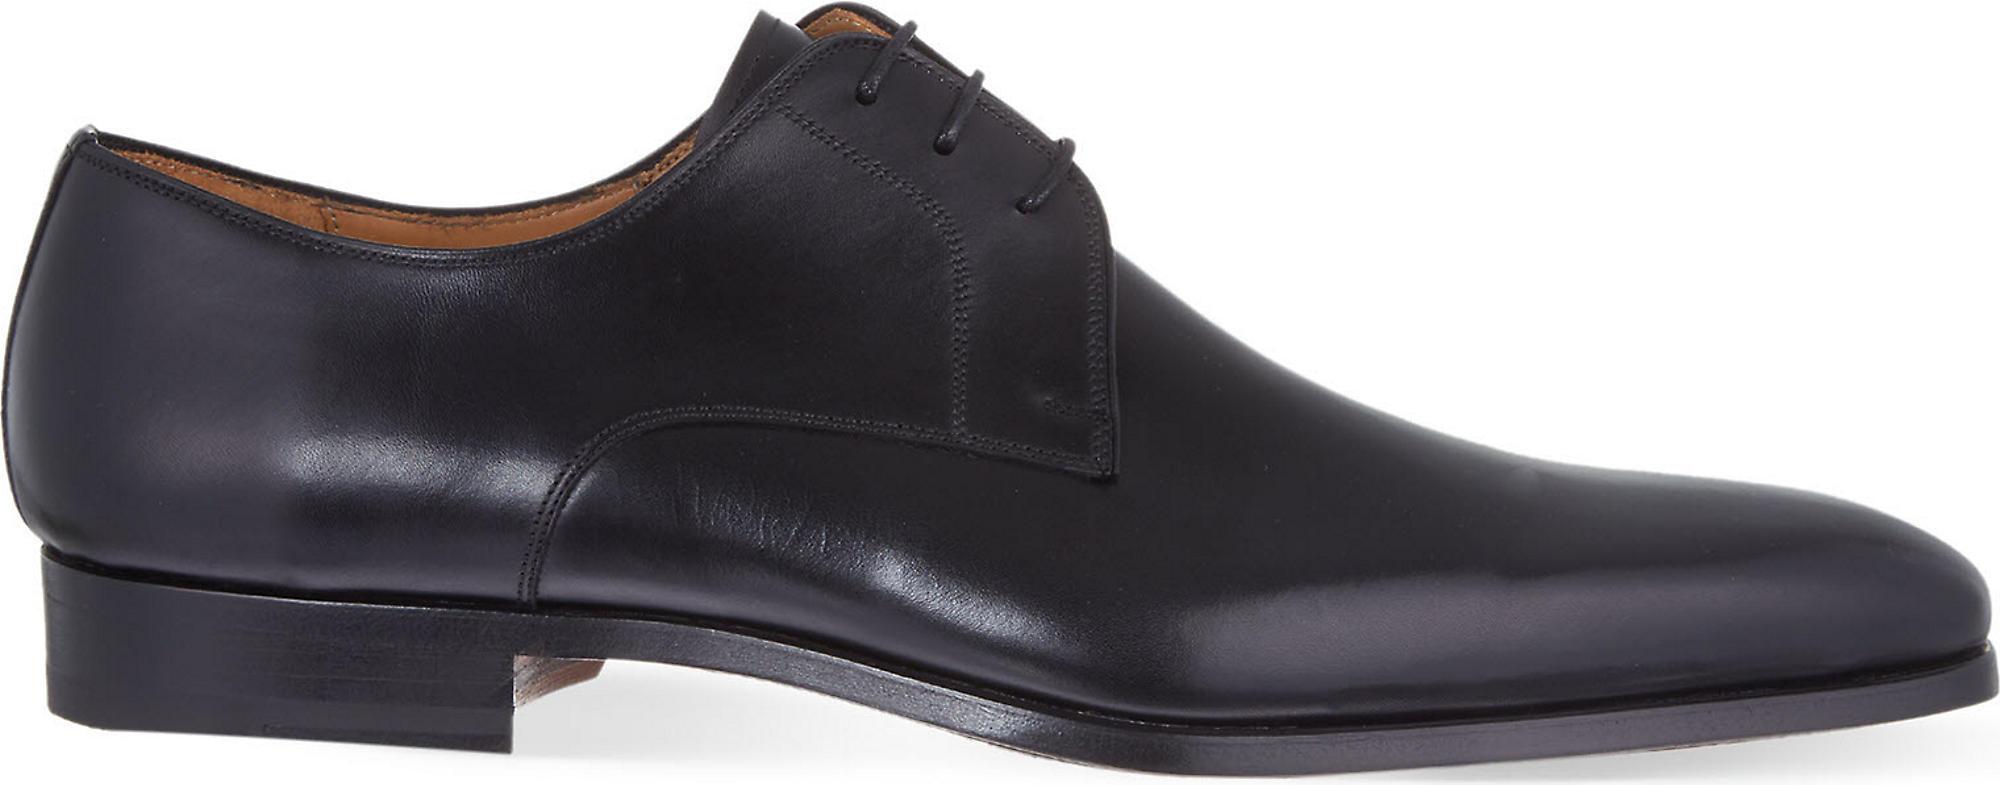 Magnanni Plain Leather Derby Shoes in Black for Men - Lyst